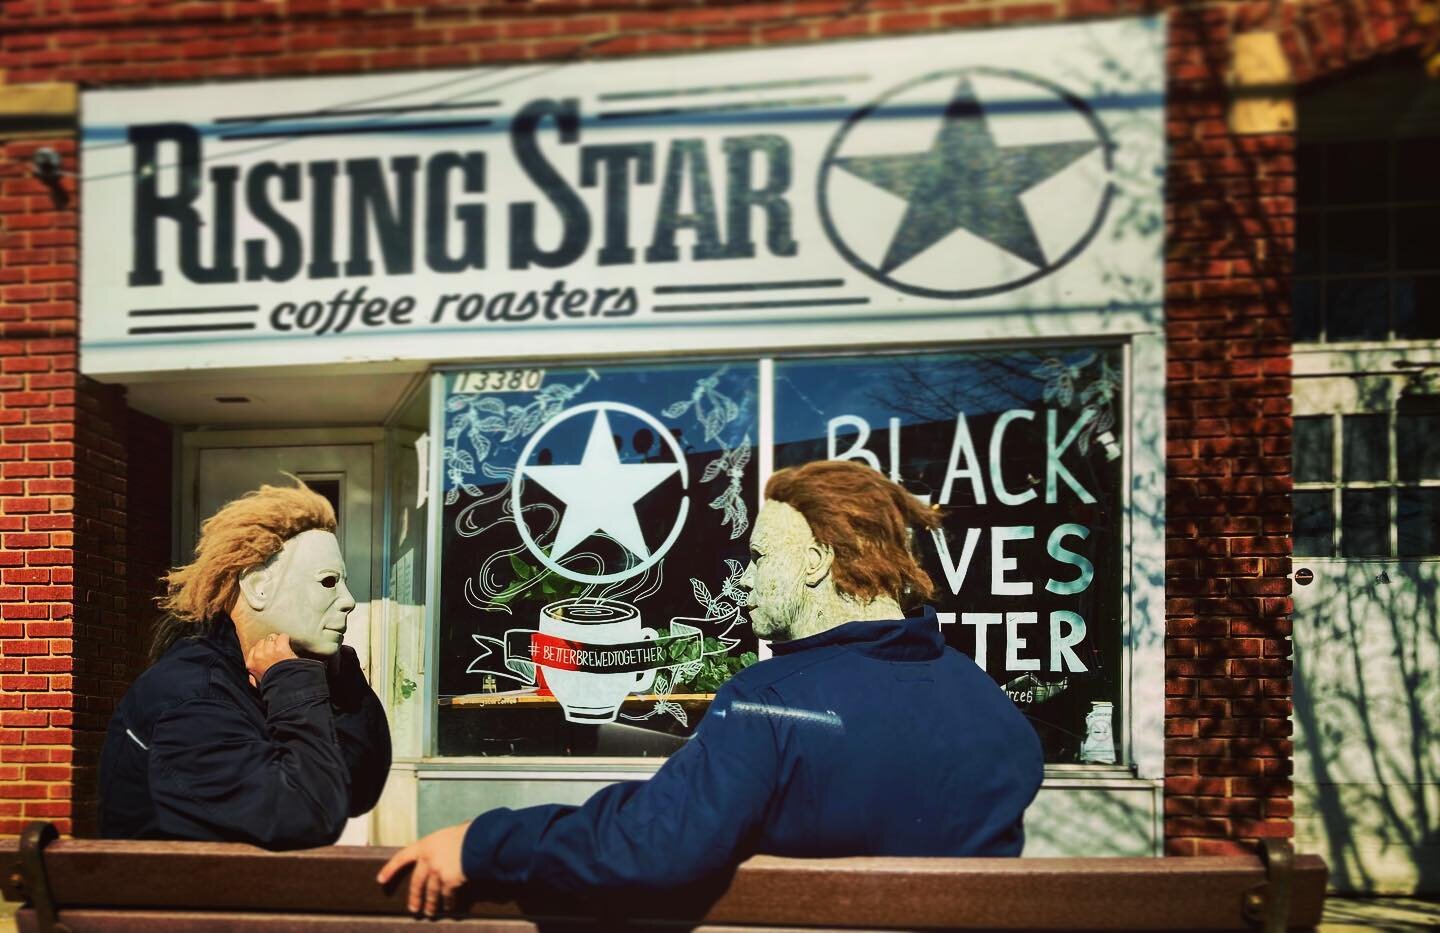 Just your average coffee run on Halloween.
.
.
.
#MichaelMyers #Halloween #HappyHalloween #Costume #Slasher #SlasherFilm JohnCarpenter #Haddonfield #Spooky #Scary #Lakewood #Ohio #Coffee #RisingStar
.
@risingstarcoffeeroasters @risingstarcoffee